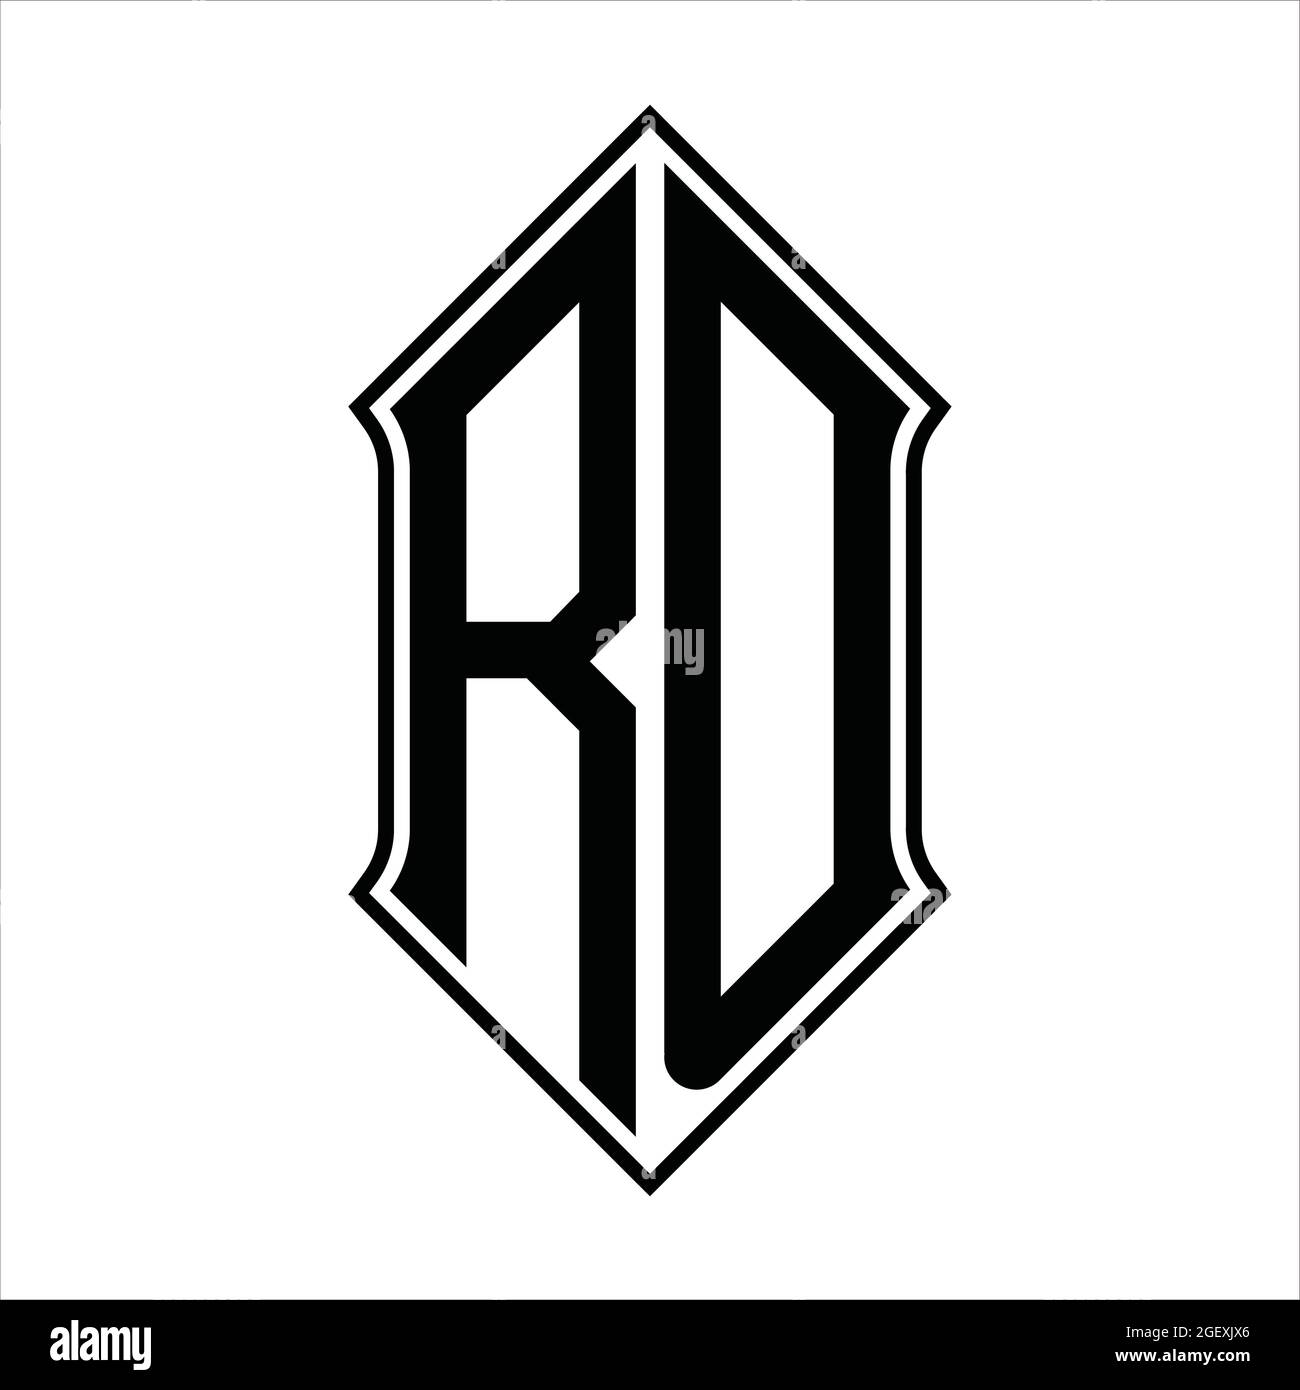 Rd Logo Monogram With Shieldshape And Black Outline Design Template